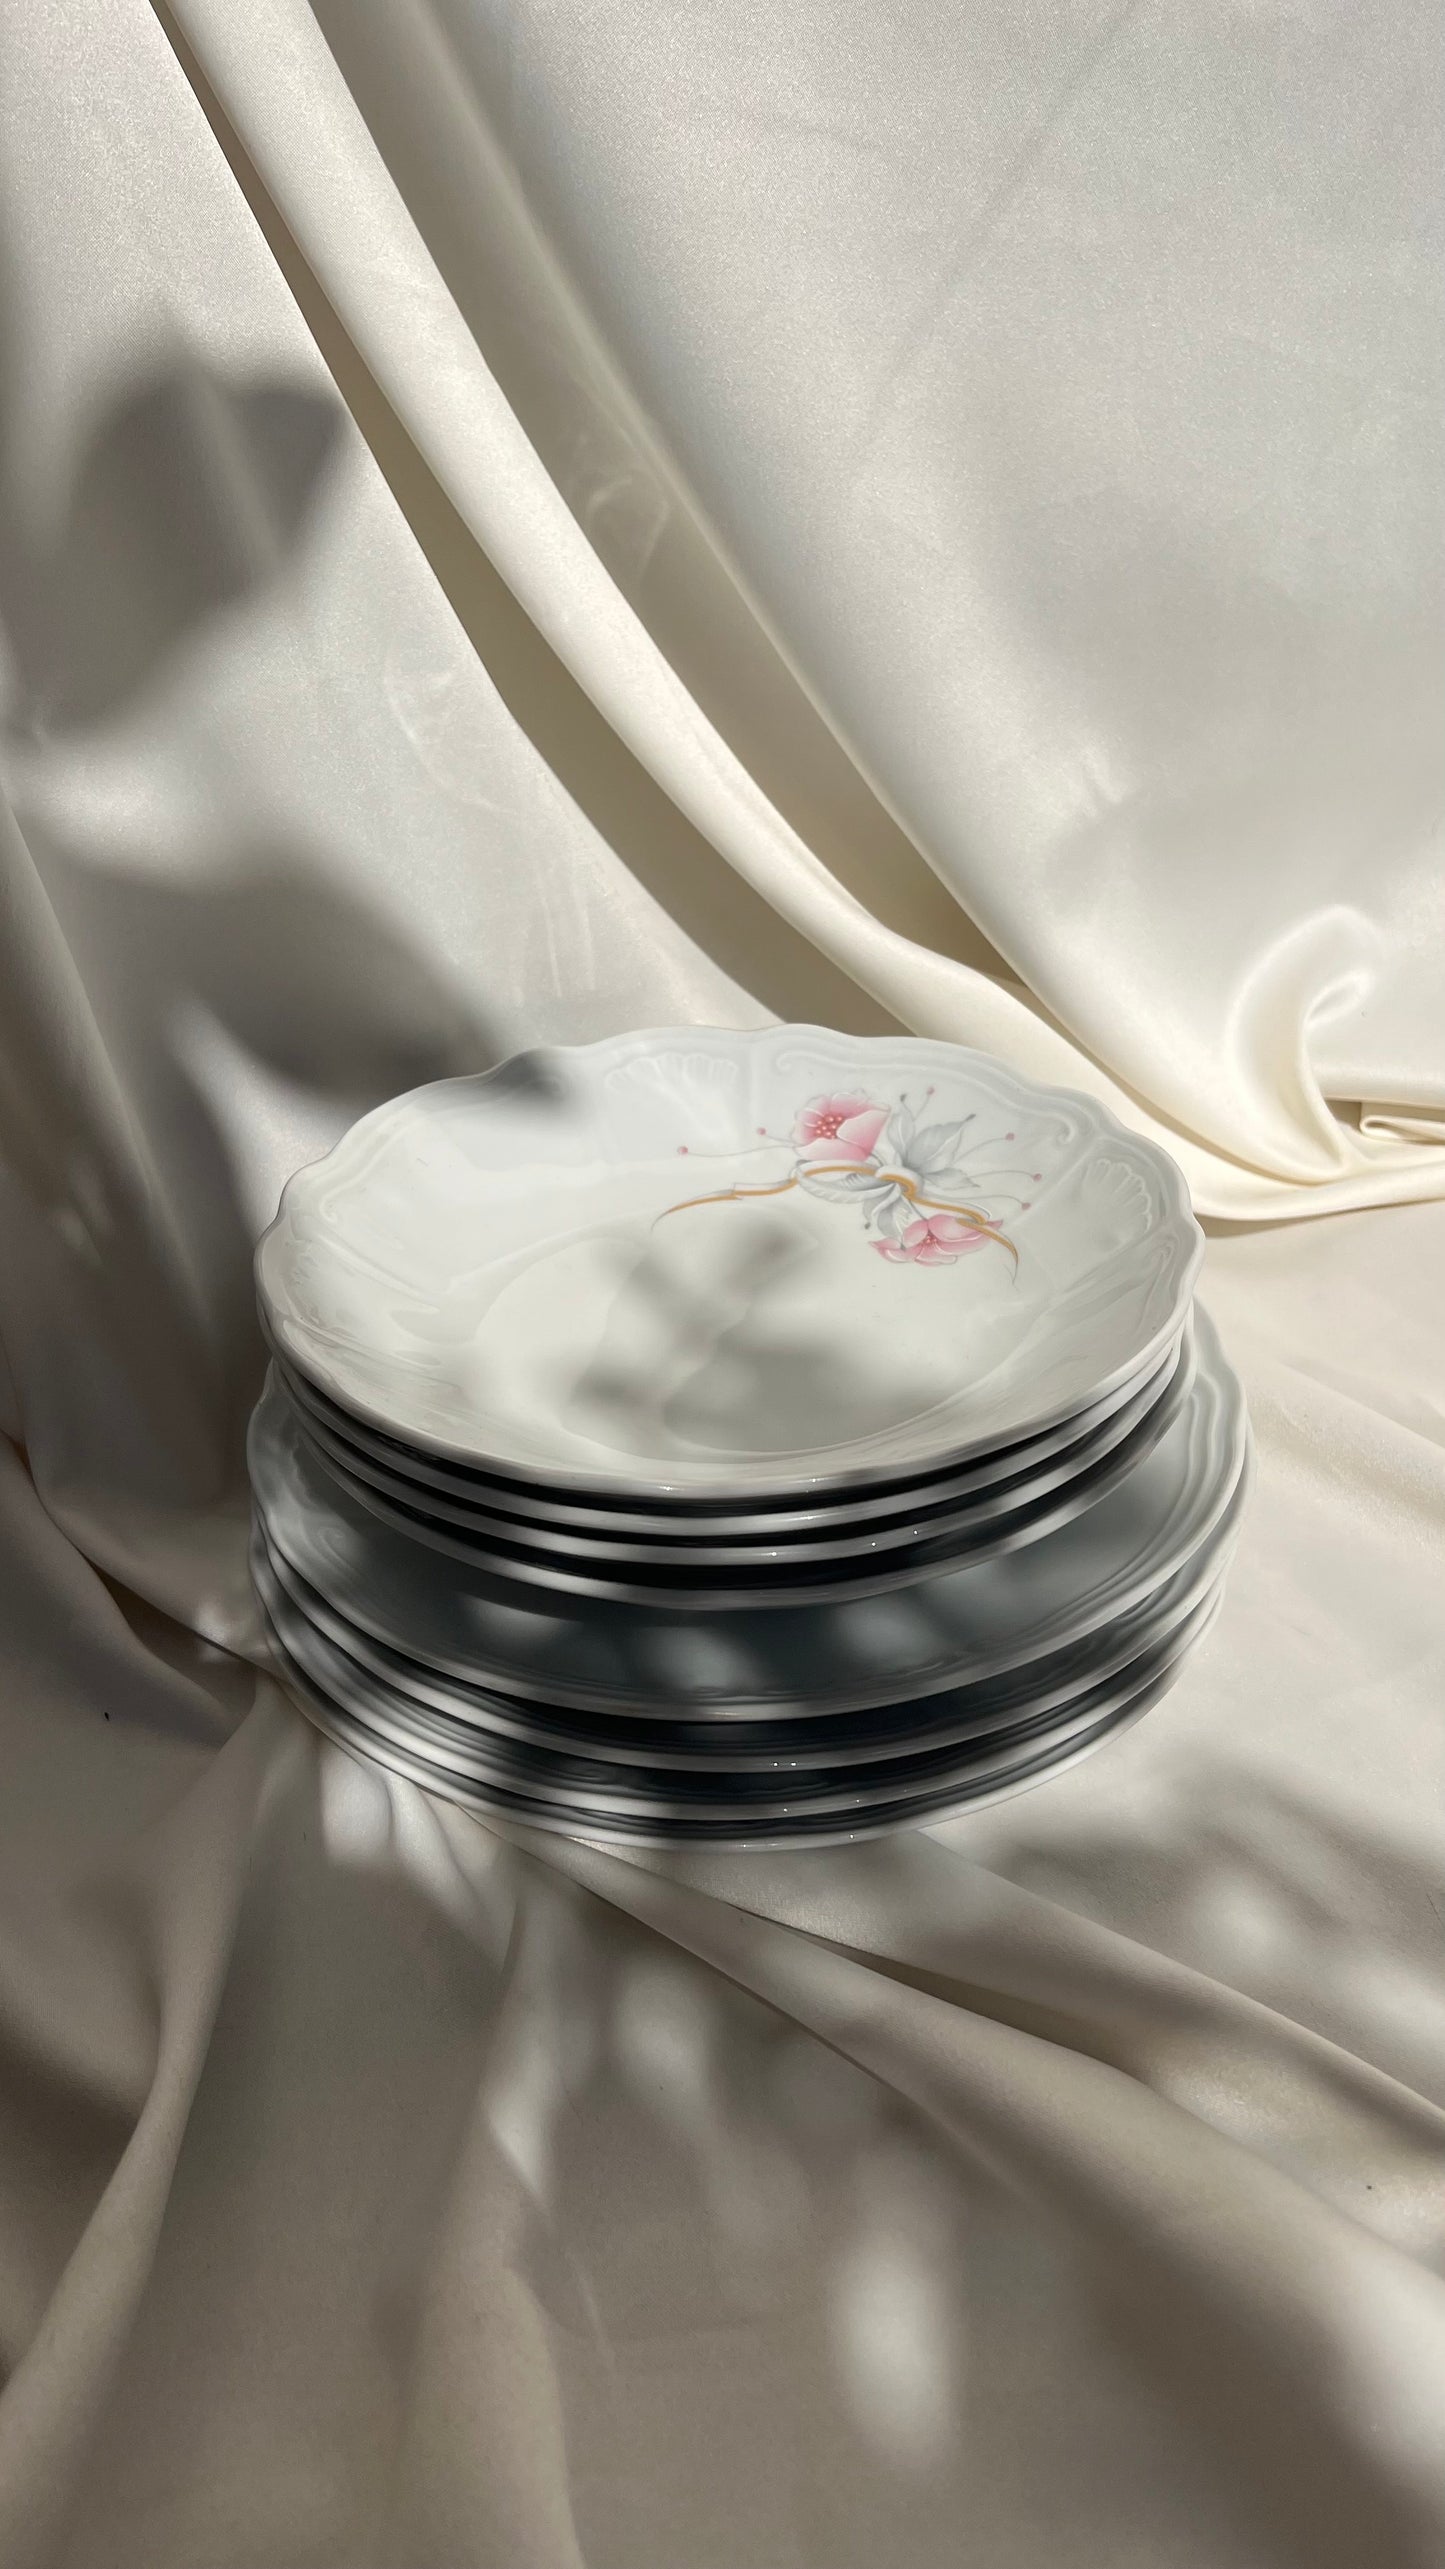 Wensiedel Bavarian porcelain | וונסידל בוואריה פורצלן